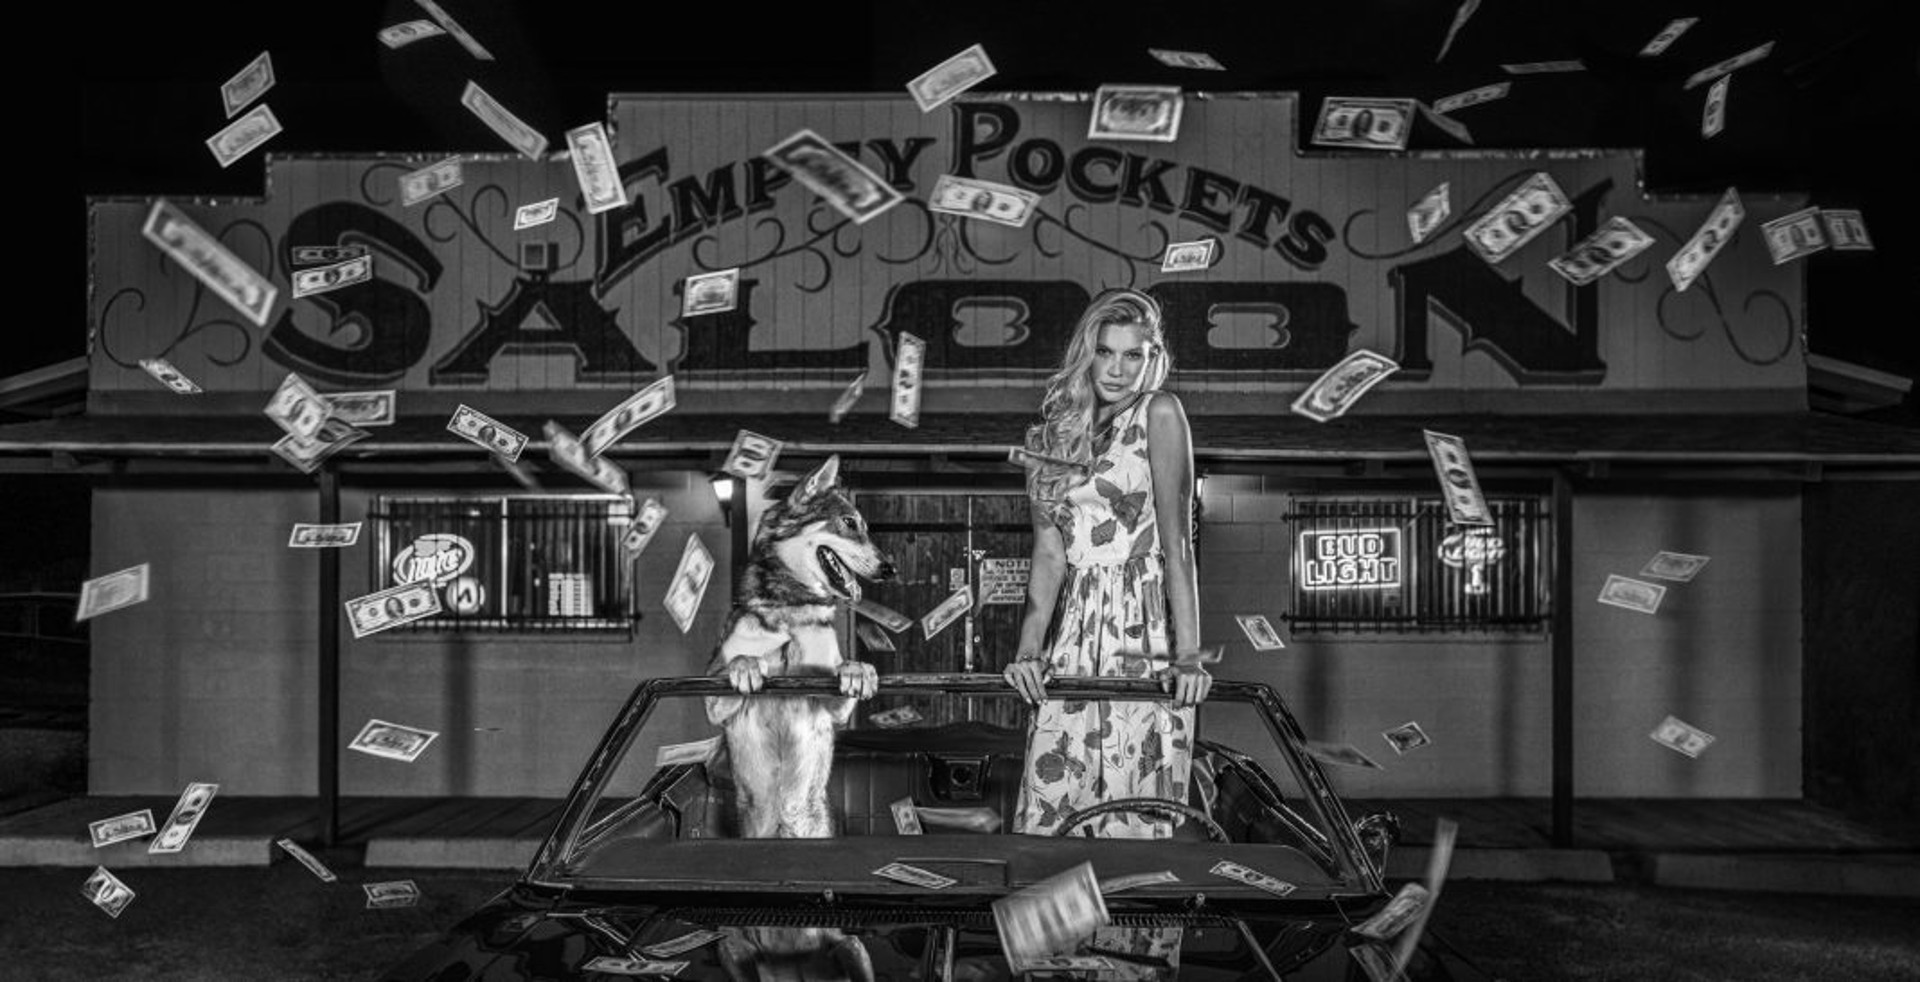 Empty Pockets Saloon (5/12) by David Yarrow